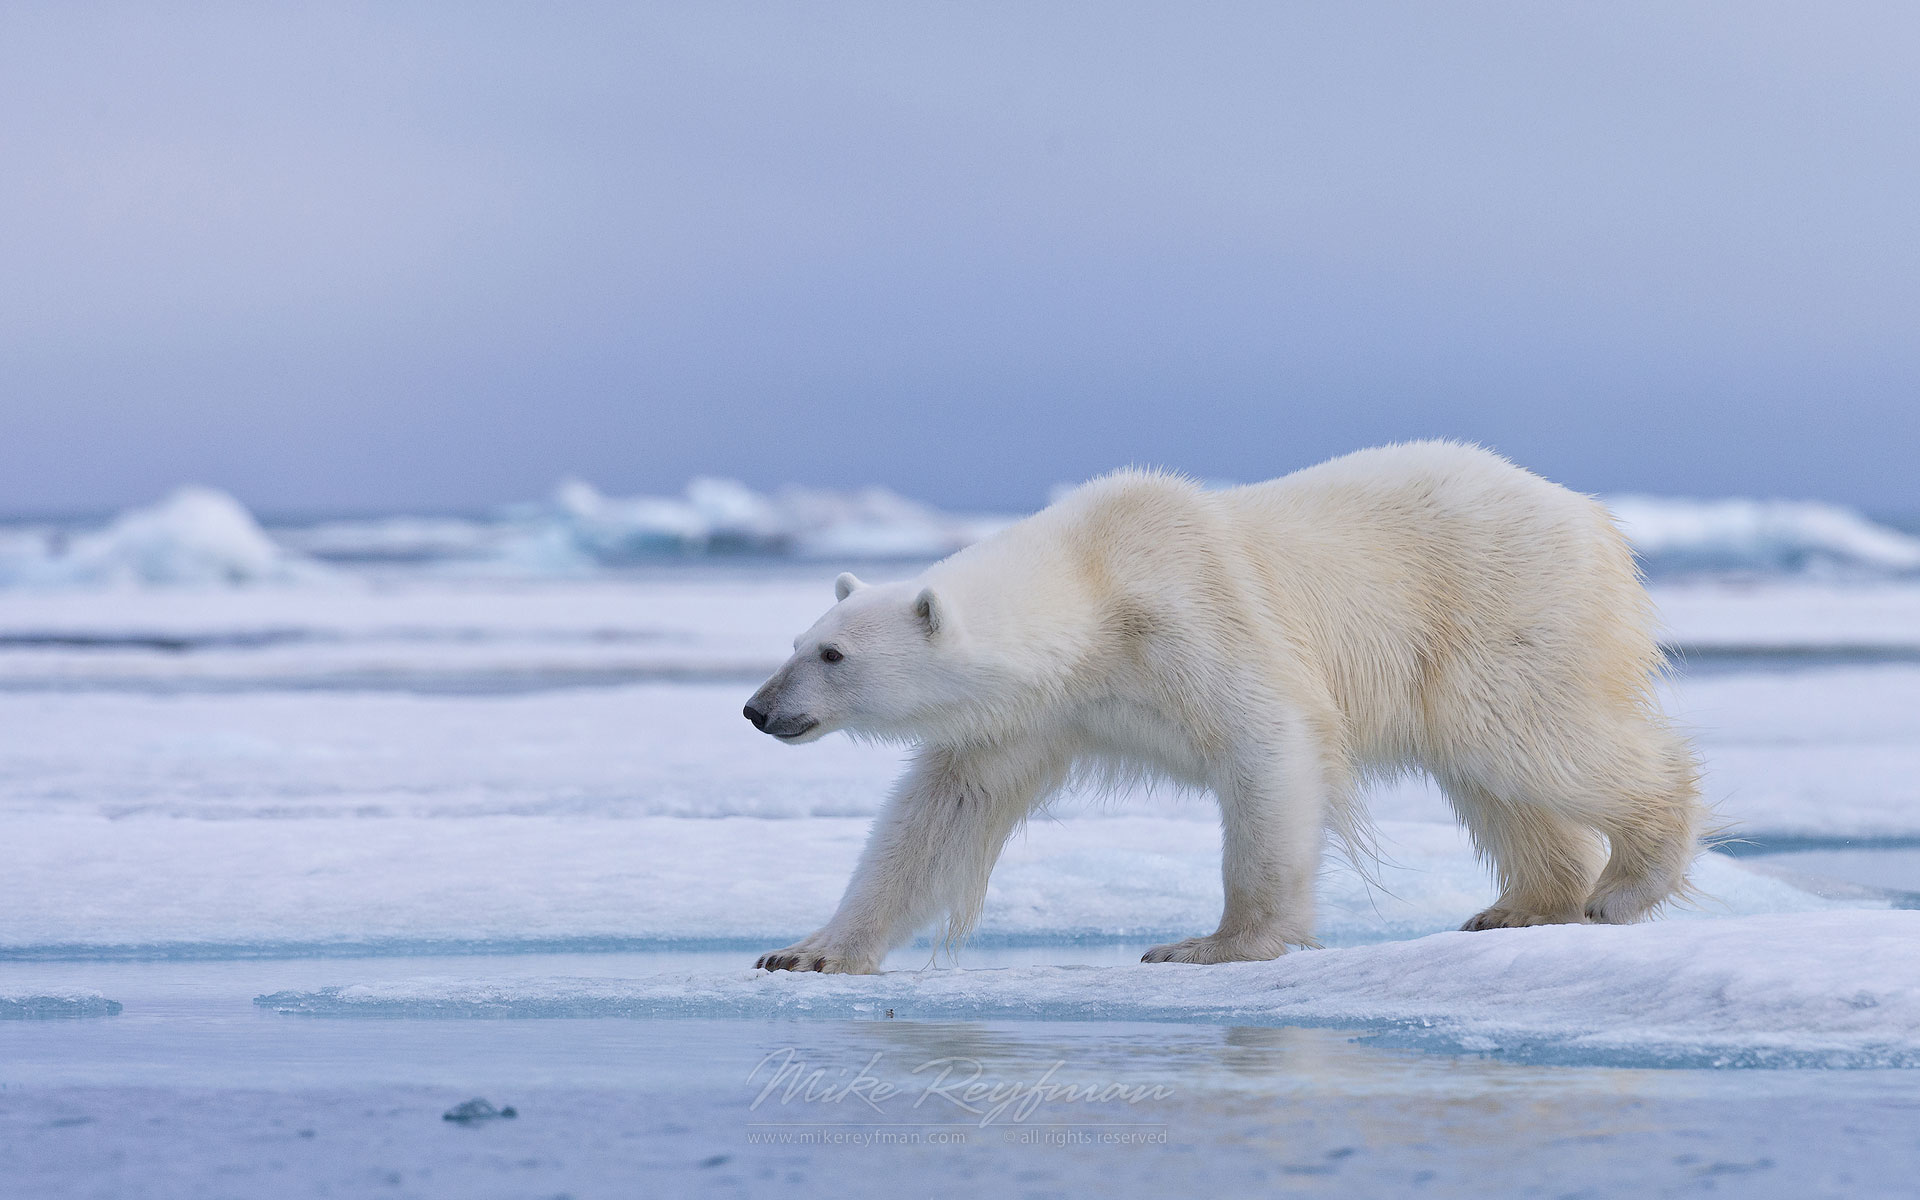 Polar bear walking on an ice floe along Spitsbergen coast. Svalbard, Norway. - Polar-Bears-Svalbard-Spitsbergen-Norway - Mike Reyfman Photography